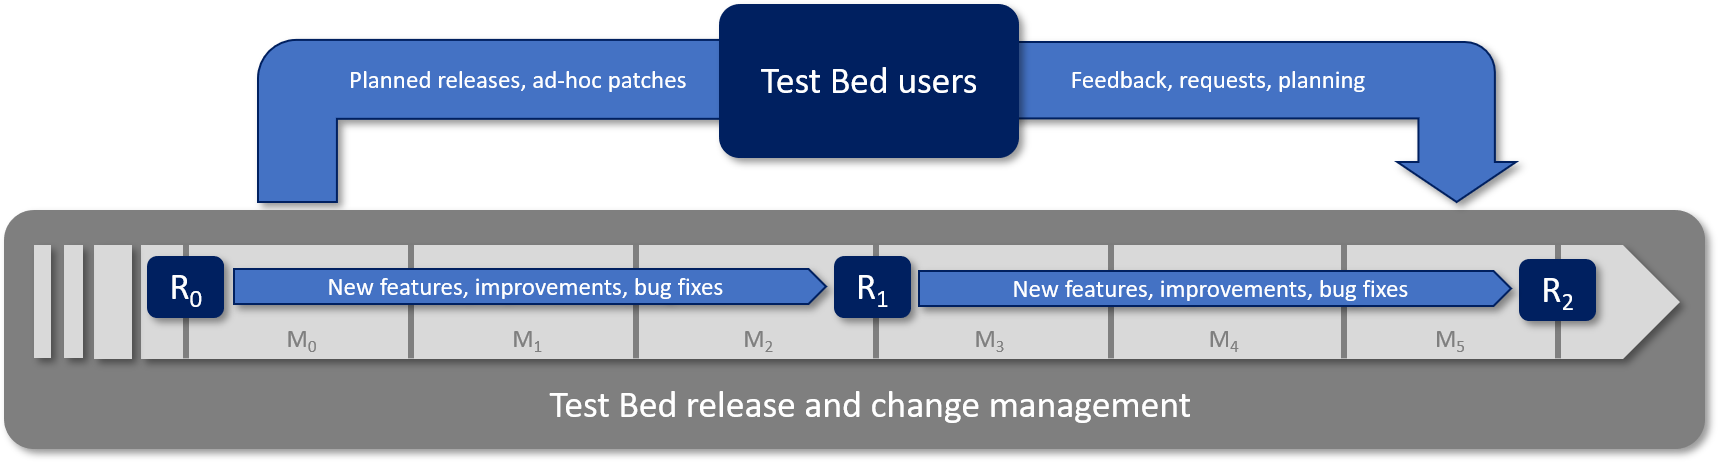 Test Bed release management